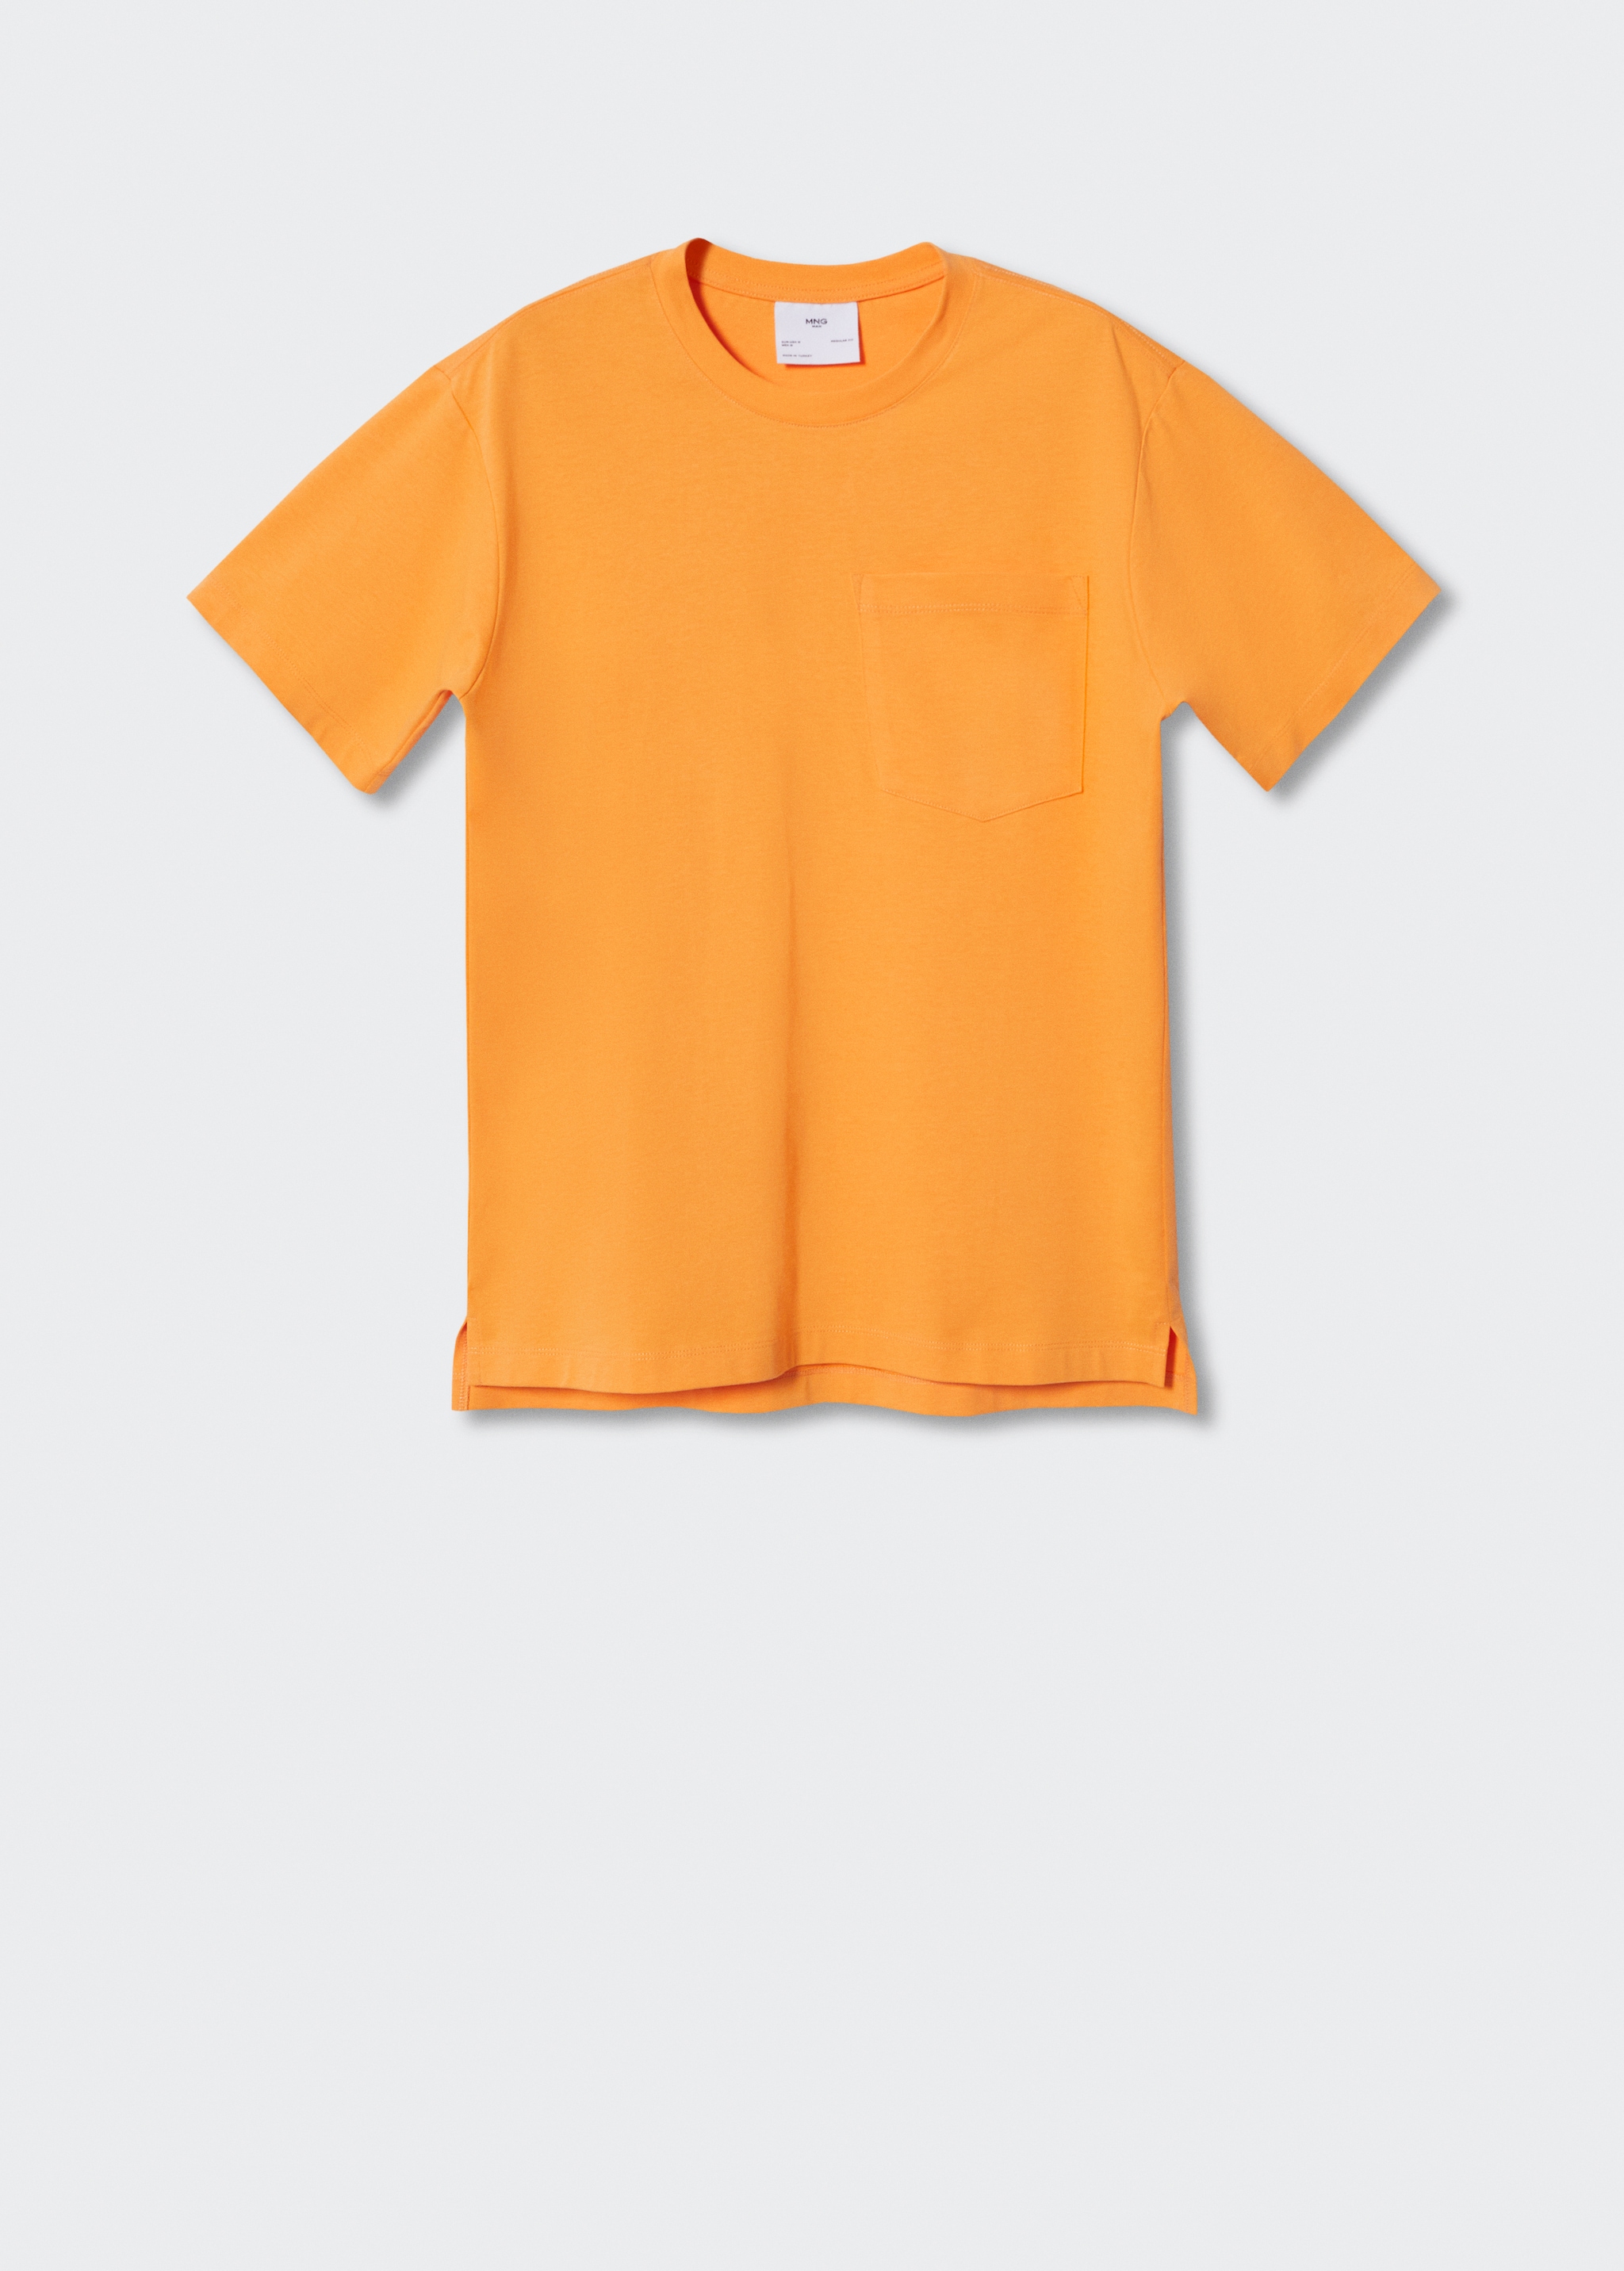 Camiseta algodón bolsillo - Artículo sin modelo